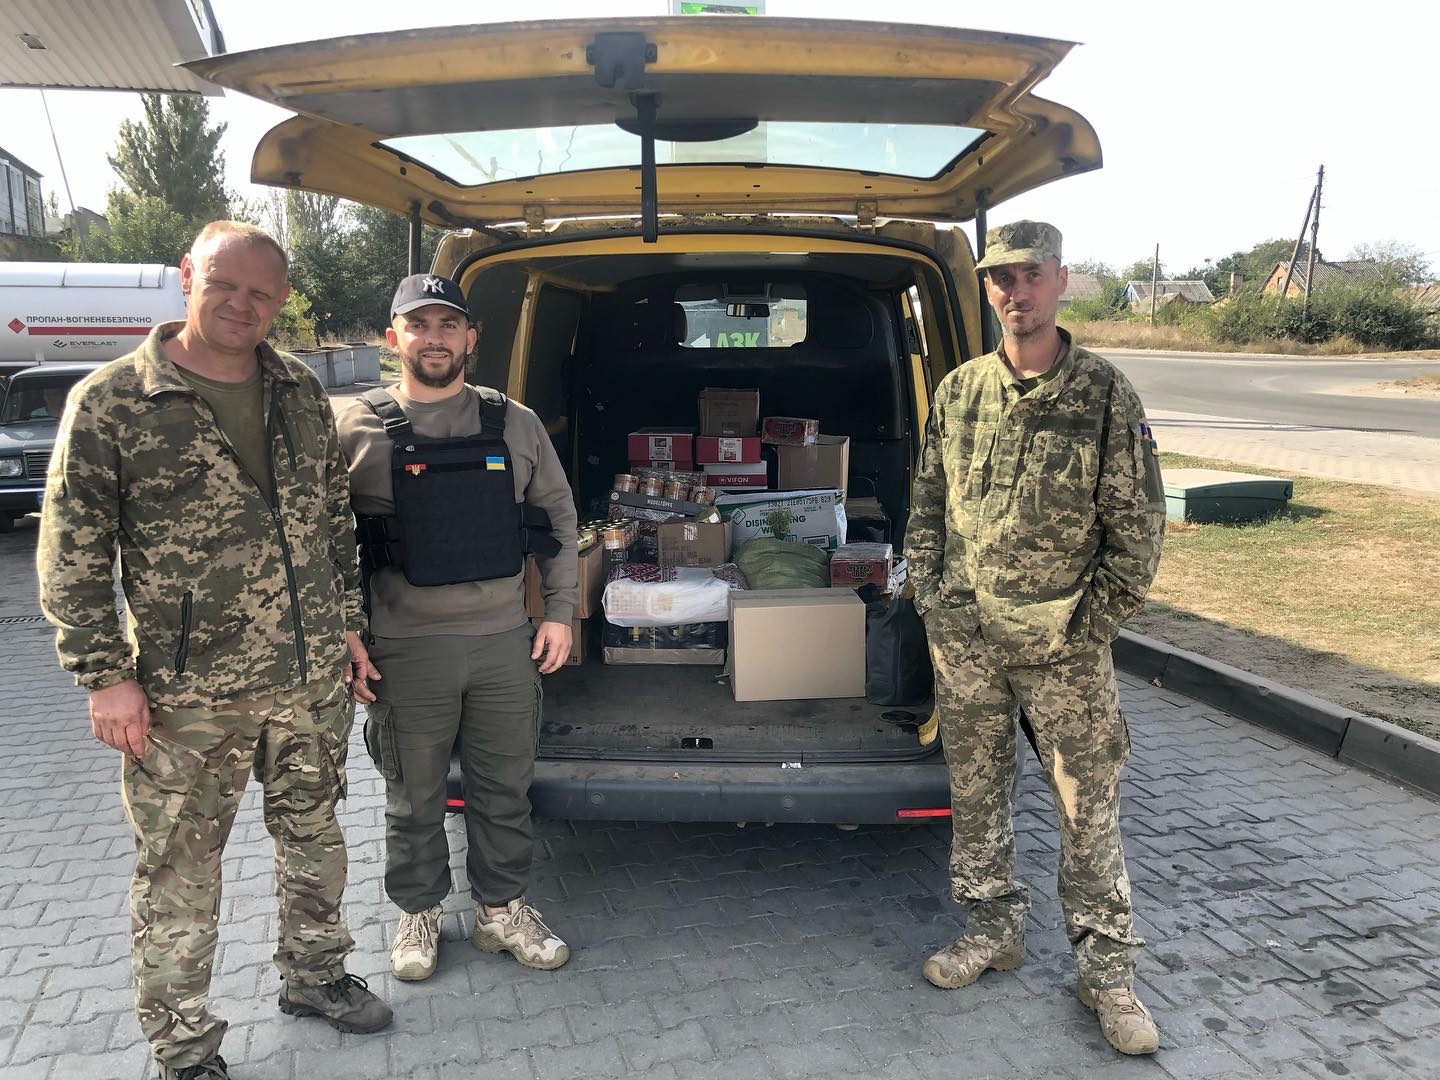 Three men in camouflage standing next to a van.